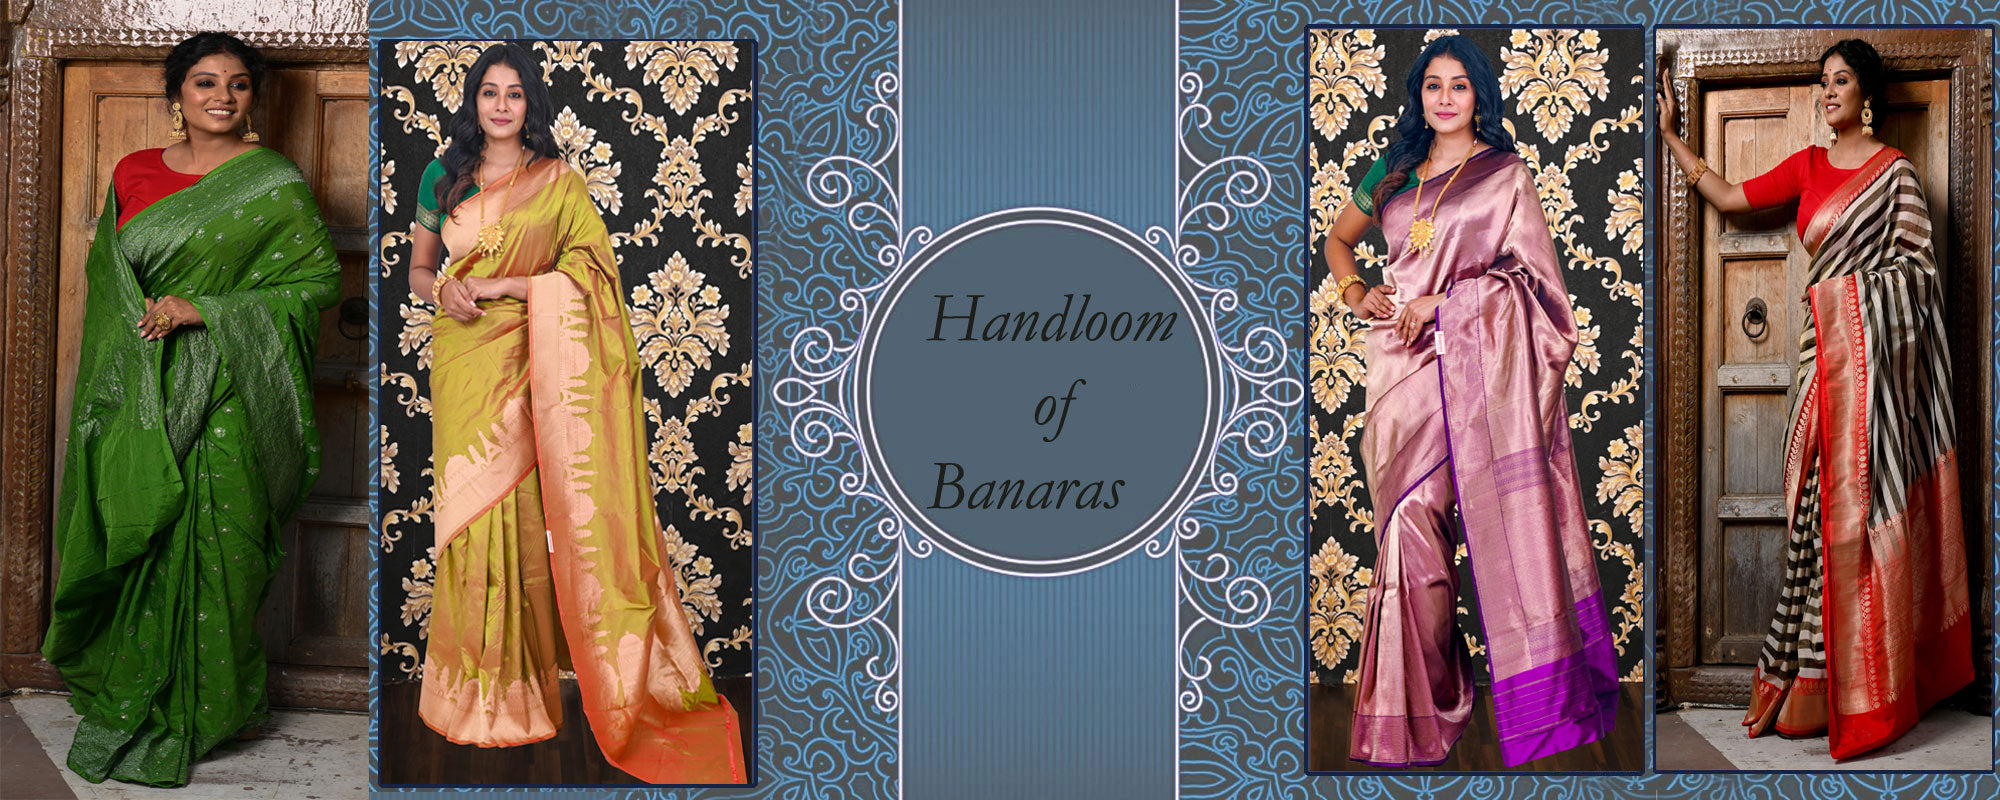 Panache Designers Hub in Durgakund,Varanasi - Best Women Readymade Garment  Retailers in Varanasi - Justdial